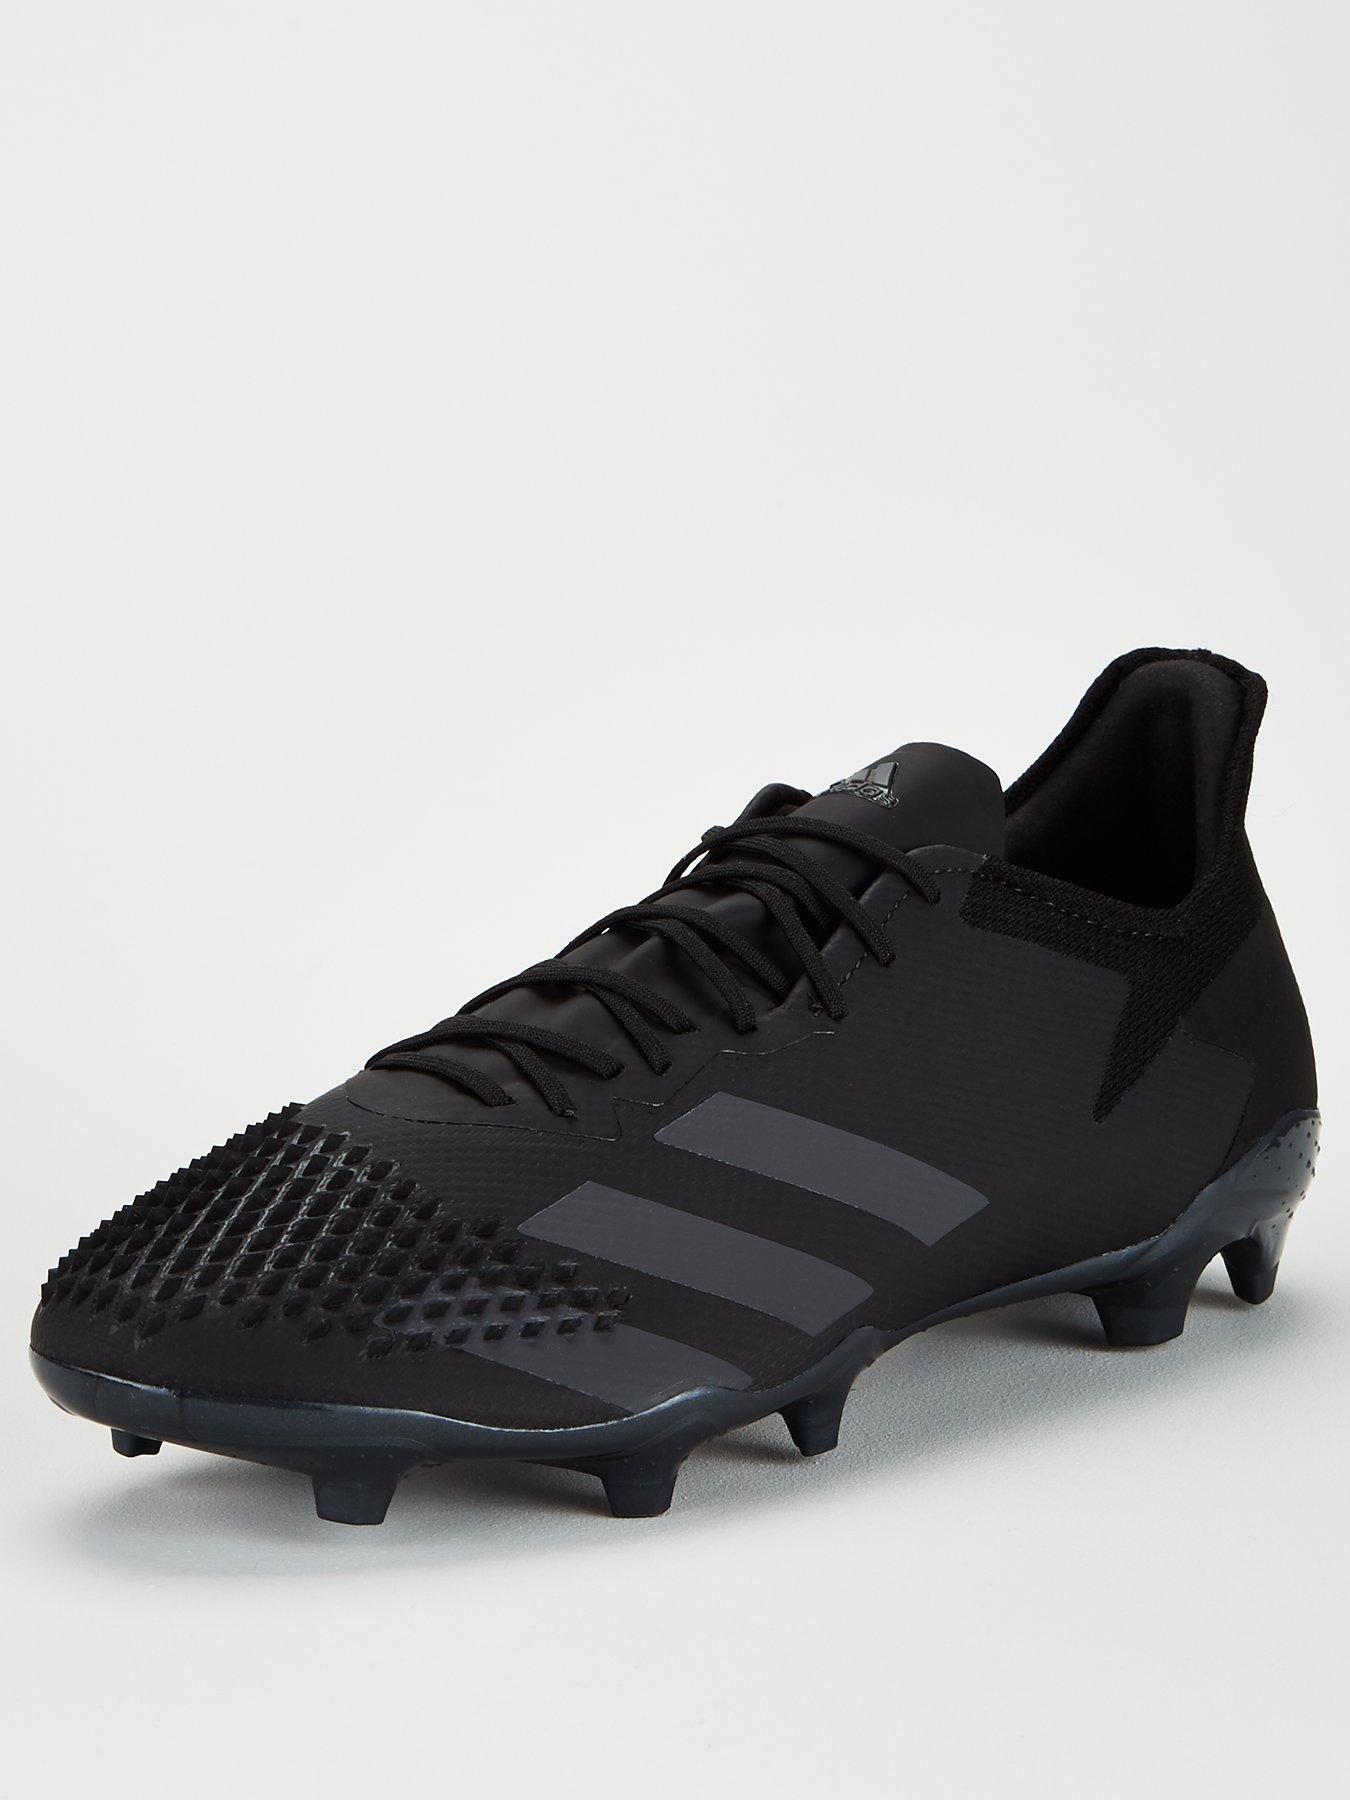 adidas latest football boots